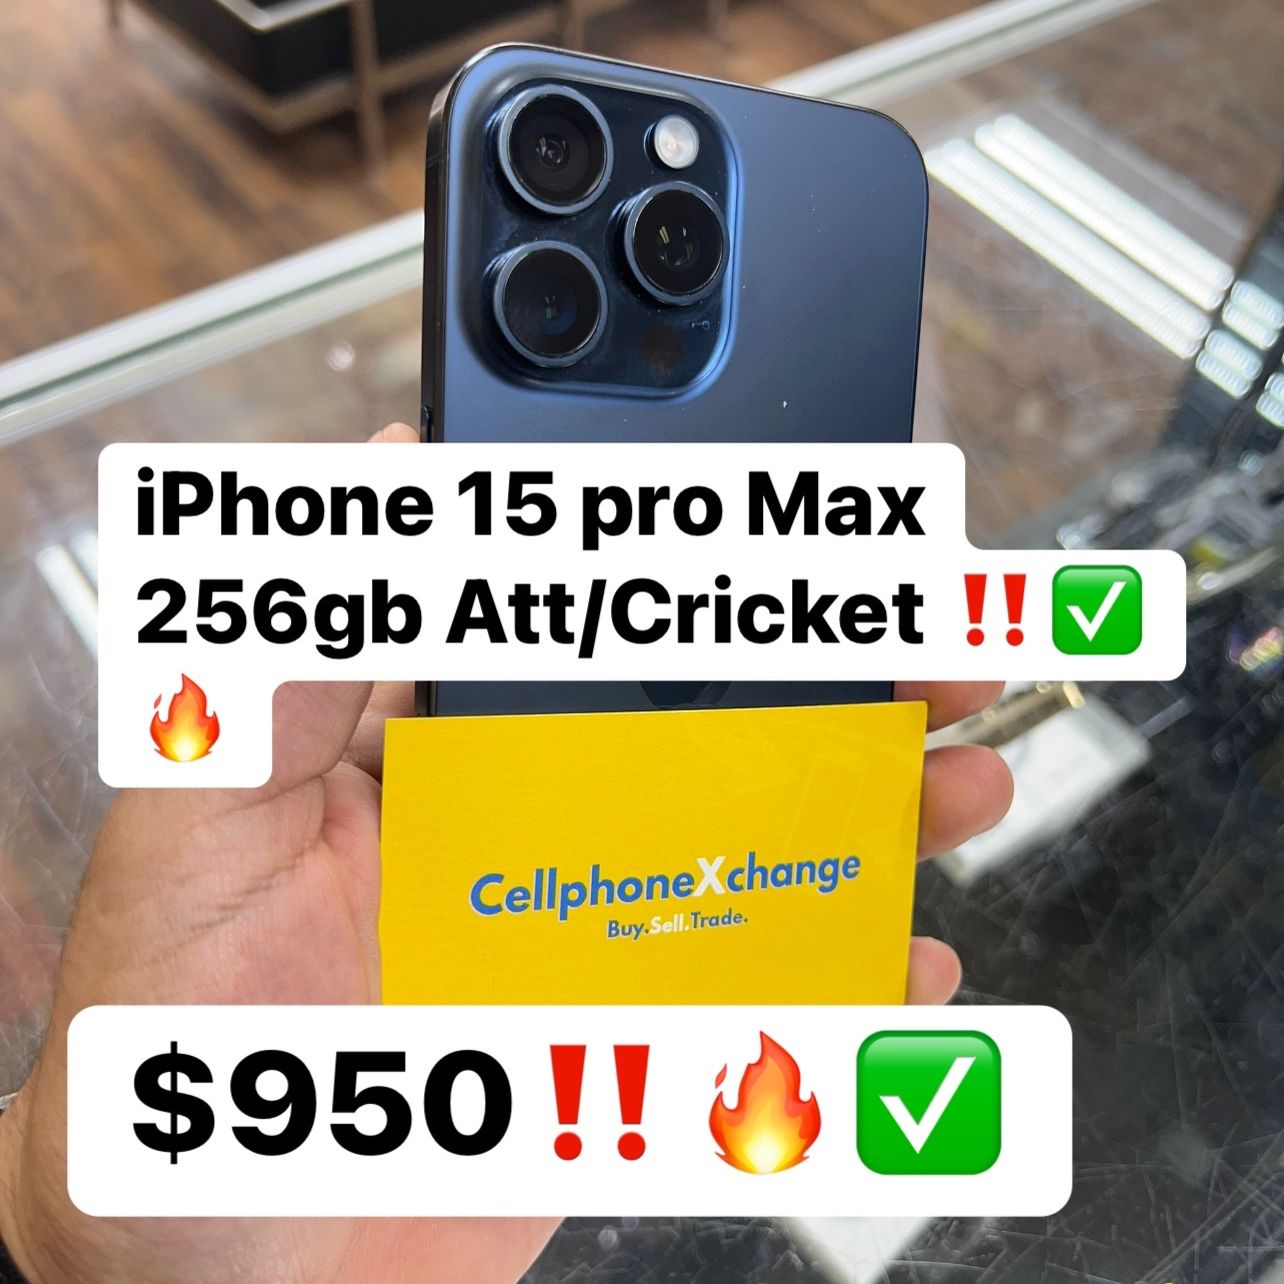 iPhone 15 Pro Max 256gb Att/ Cricket 